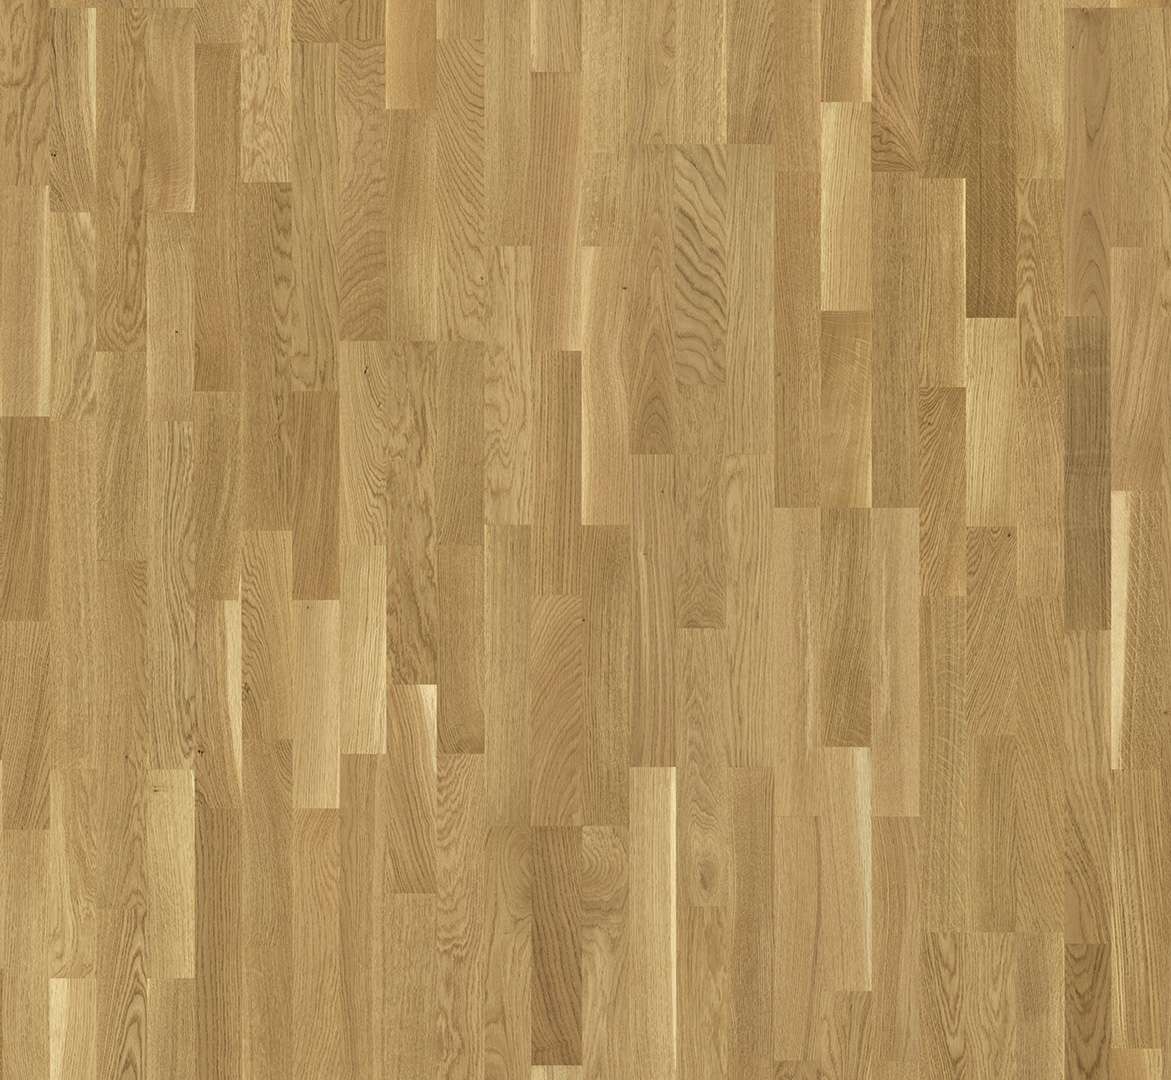 PARADOR Classic 3060 (Dub - Living - lak) 1247126 - dřevěná třívrstvá podlaha